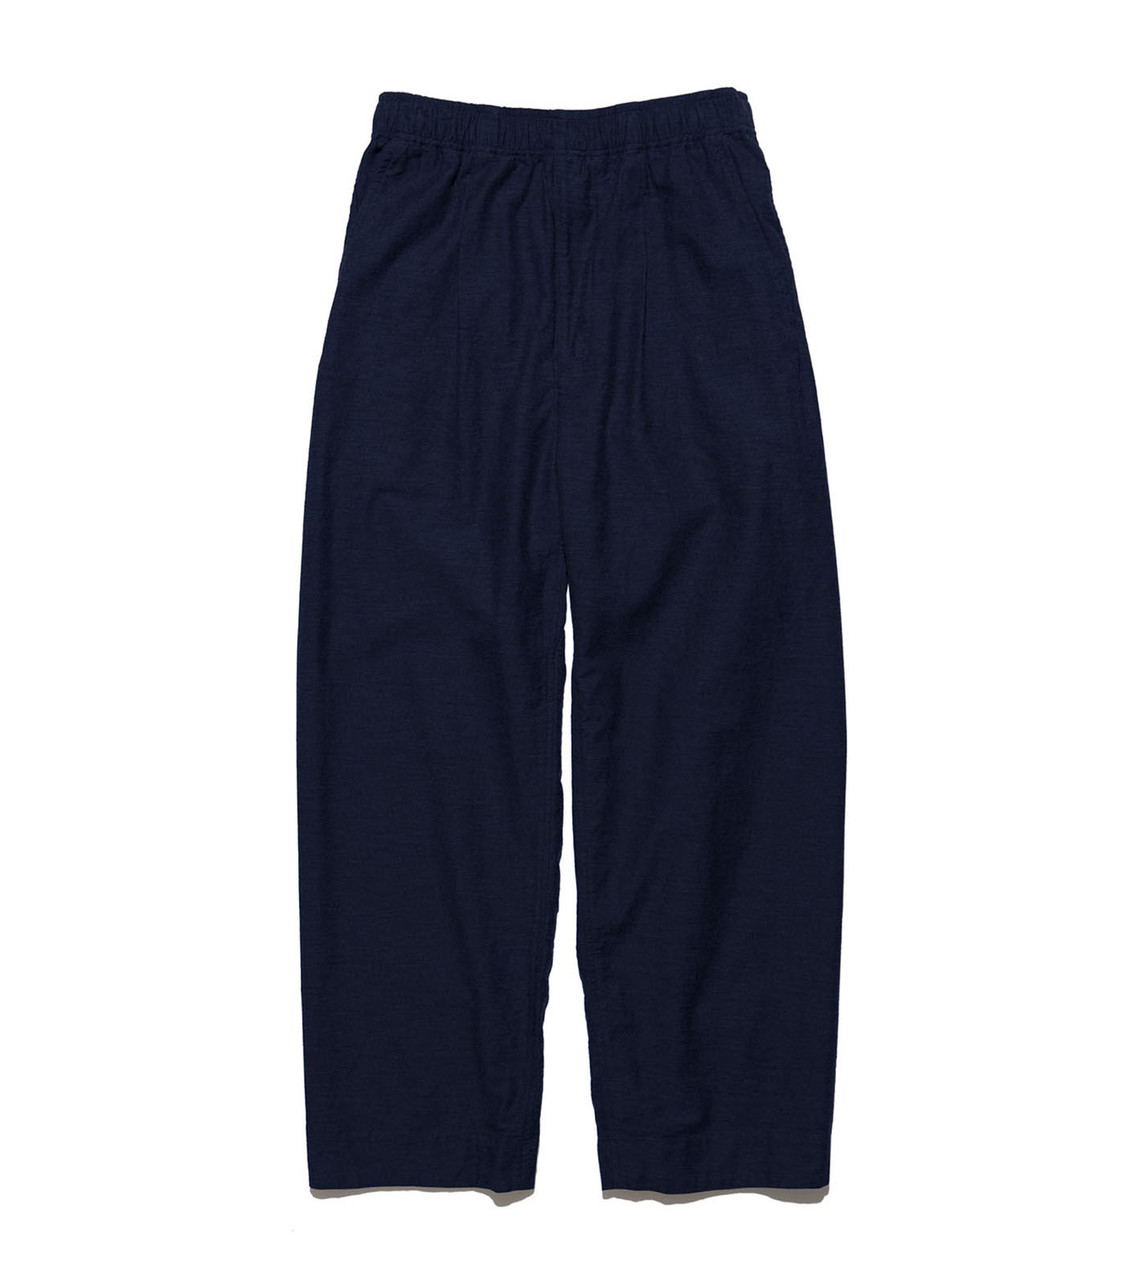 nanamica PANTS Flannel ODU Pants Online Shop to Worldwide